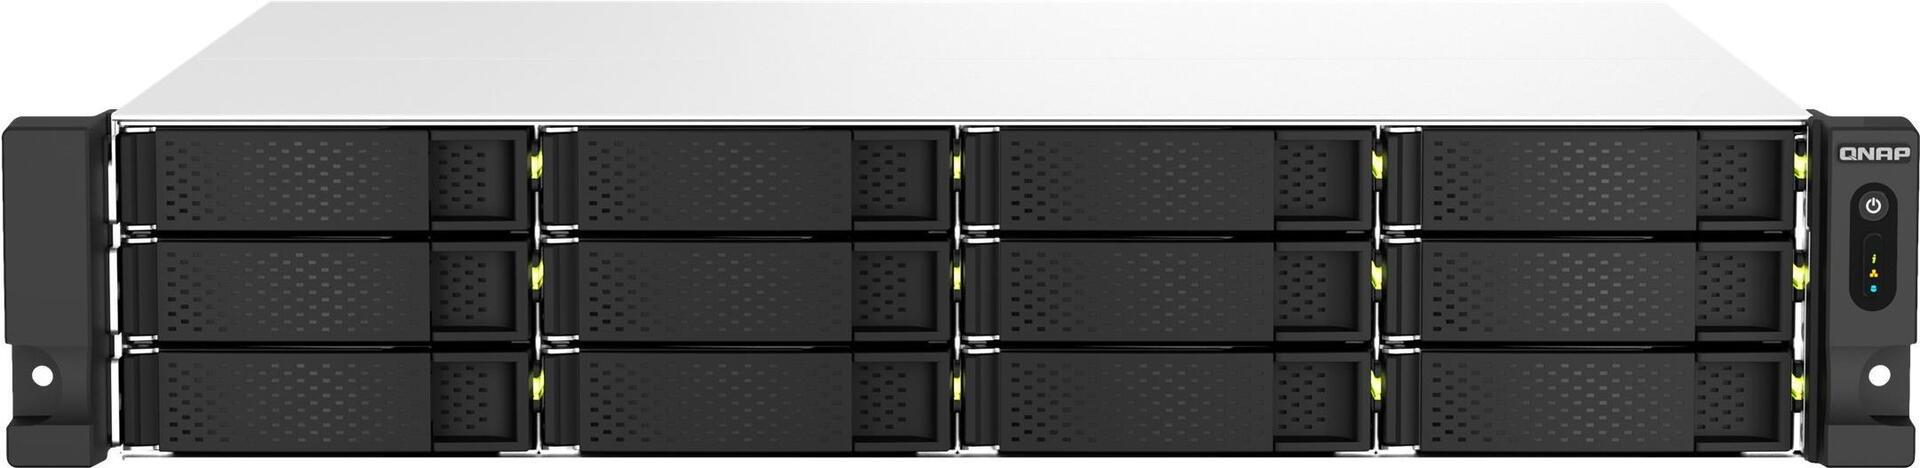 Image of QNAP TS-1264U-RP - NAS-Server - 12 Schächte - Rack - einbaufähig - SATA 6Gb/s - RAID RAID 0, 1, 5, 6, 10, 50, JBOD, 60 - RAM 8GB - 2,5 Gigabit Ethernet - iSCSI Support - 2U (TS-1264U-RP-8G)